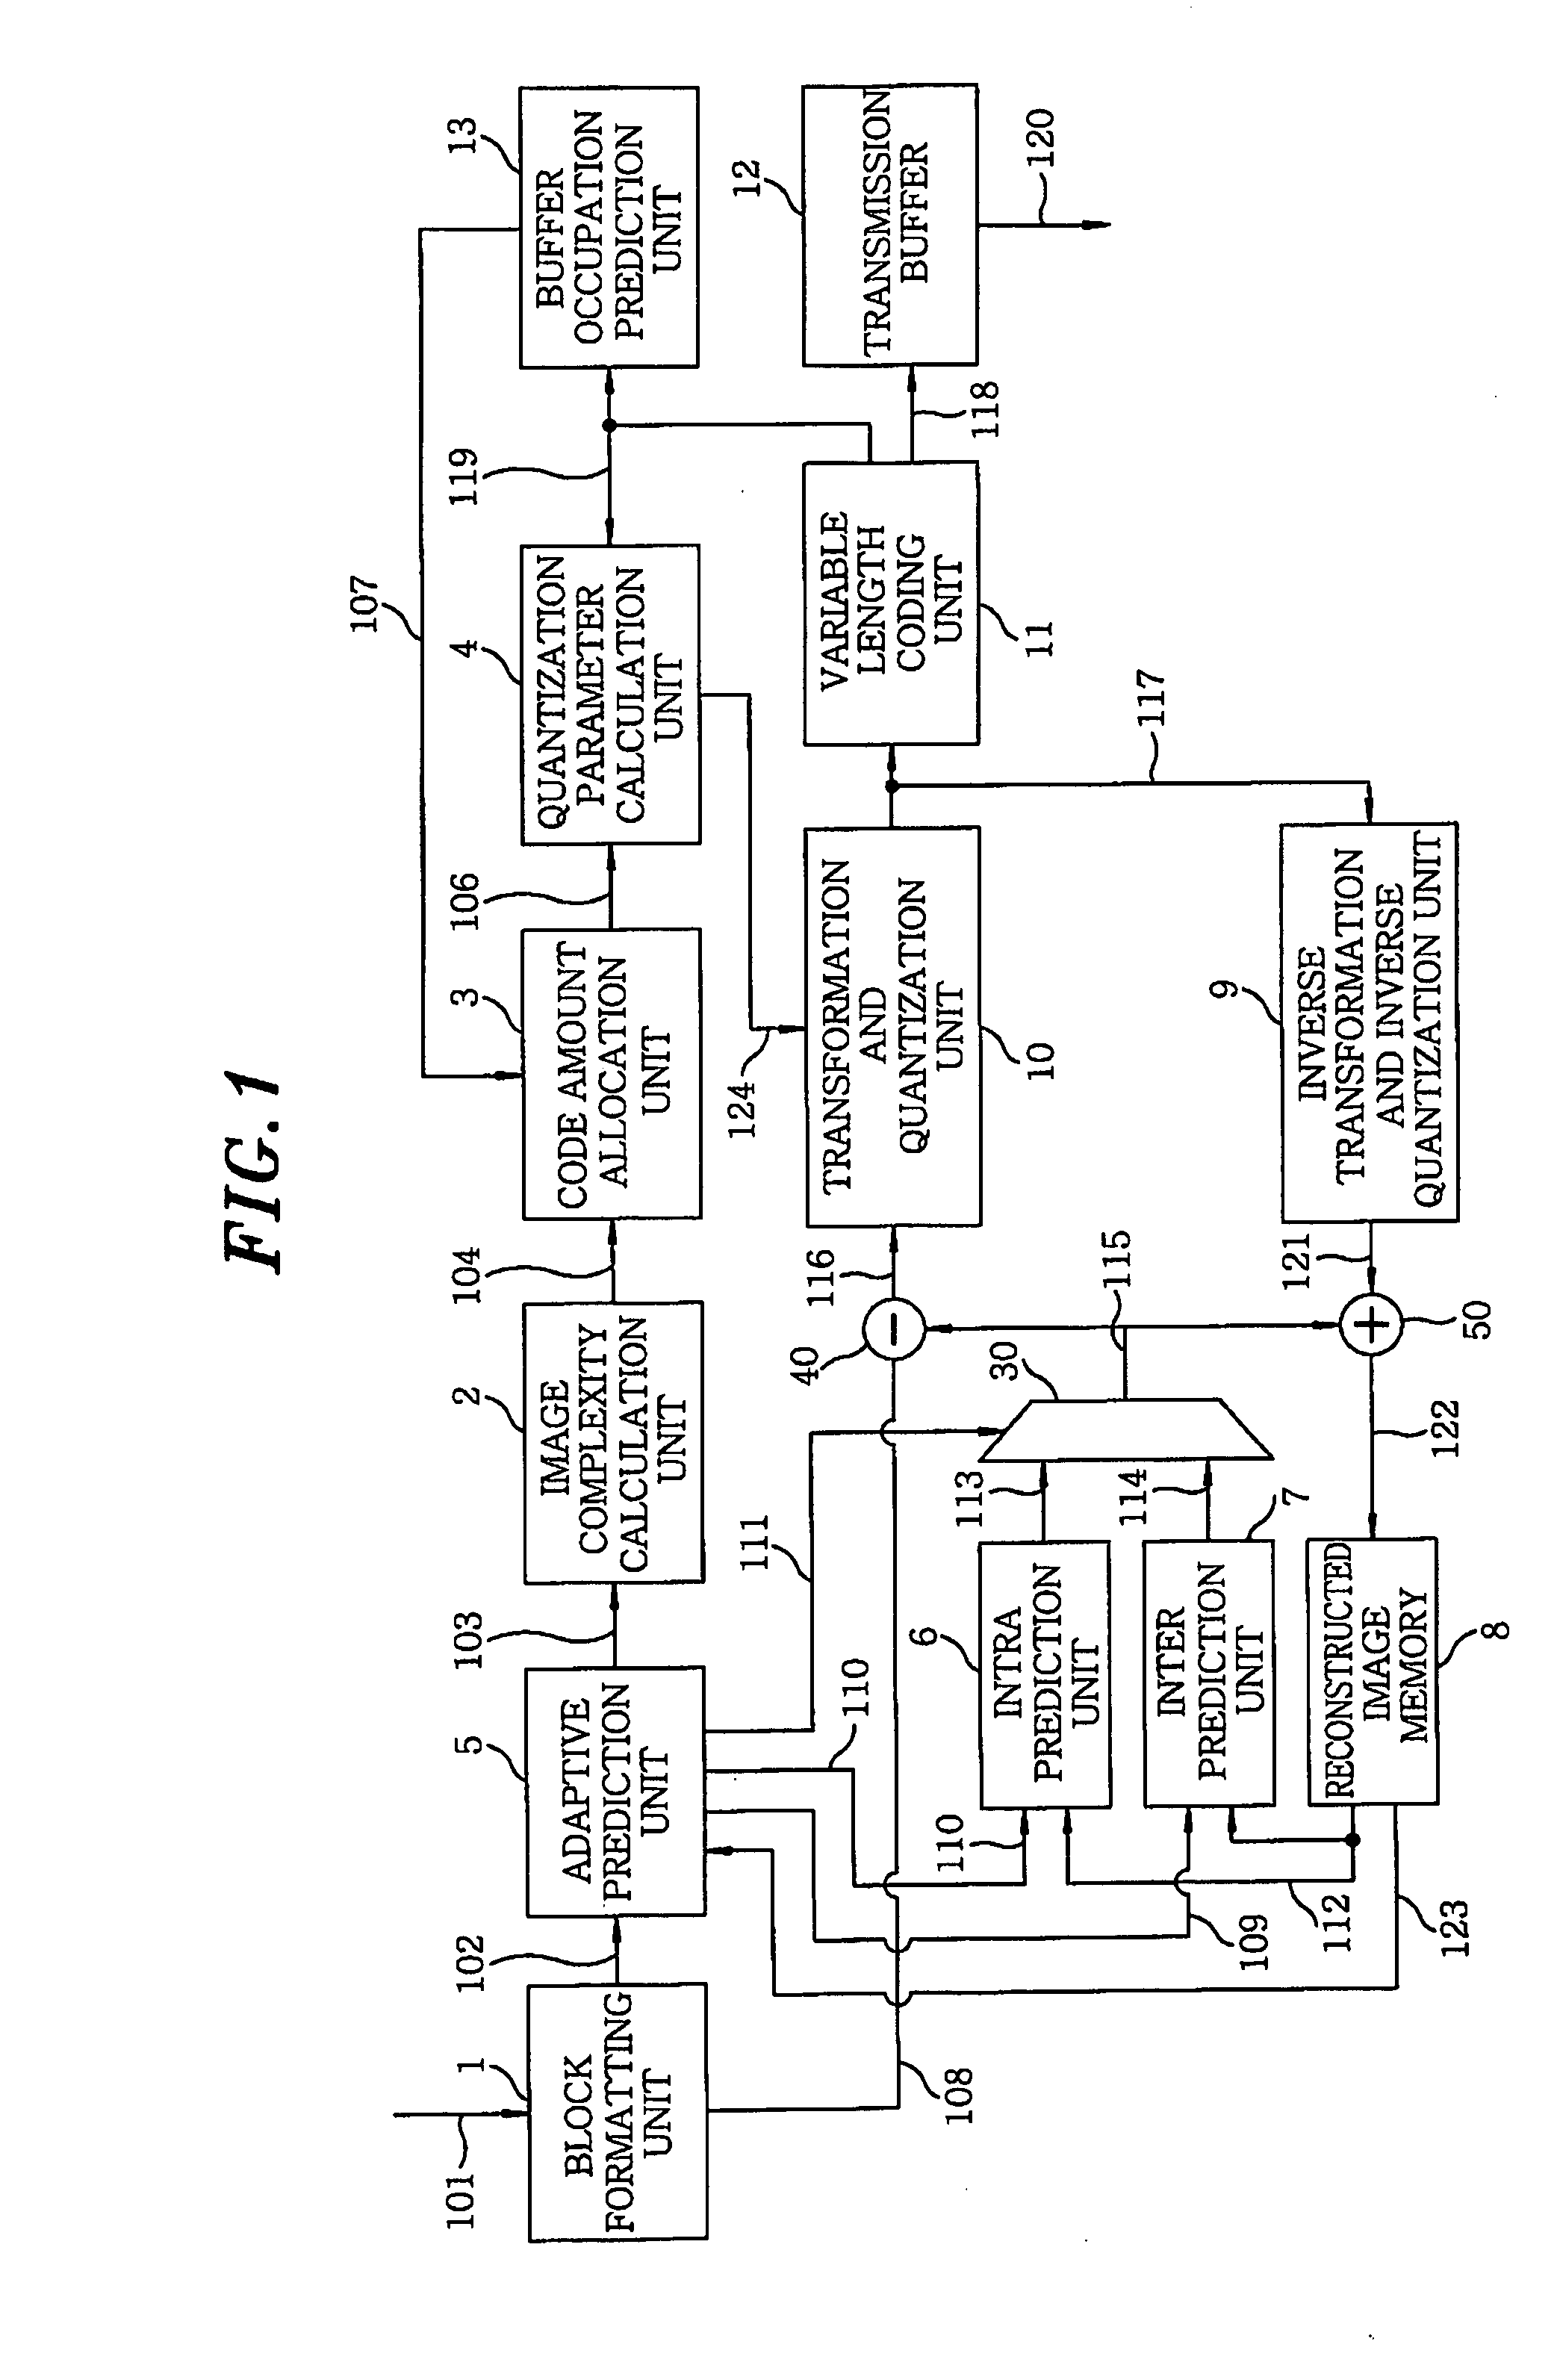 Image encoding apparatus and method